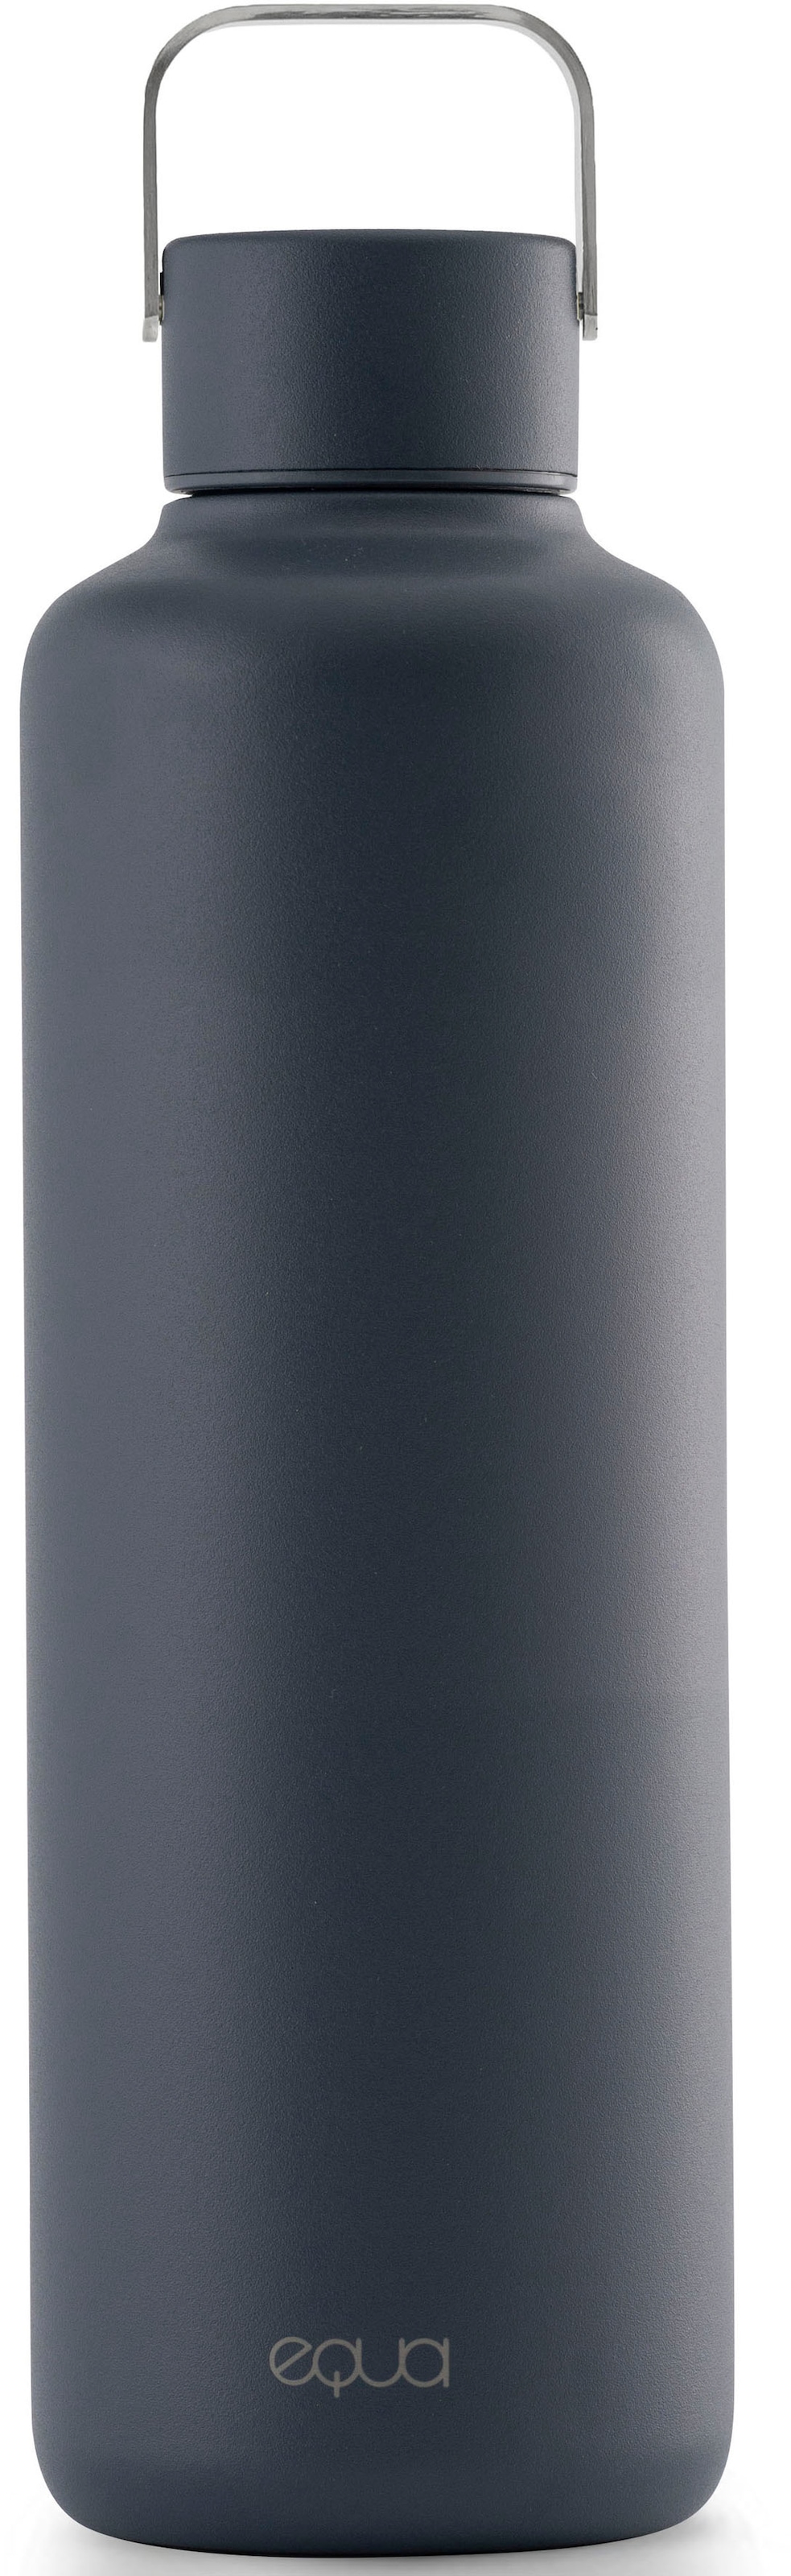 equa Trinkflasche »Timeless Navy«, Edelstahl, 1000 ml